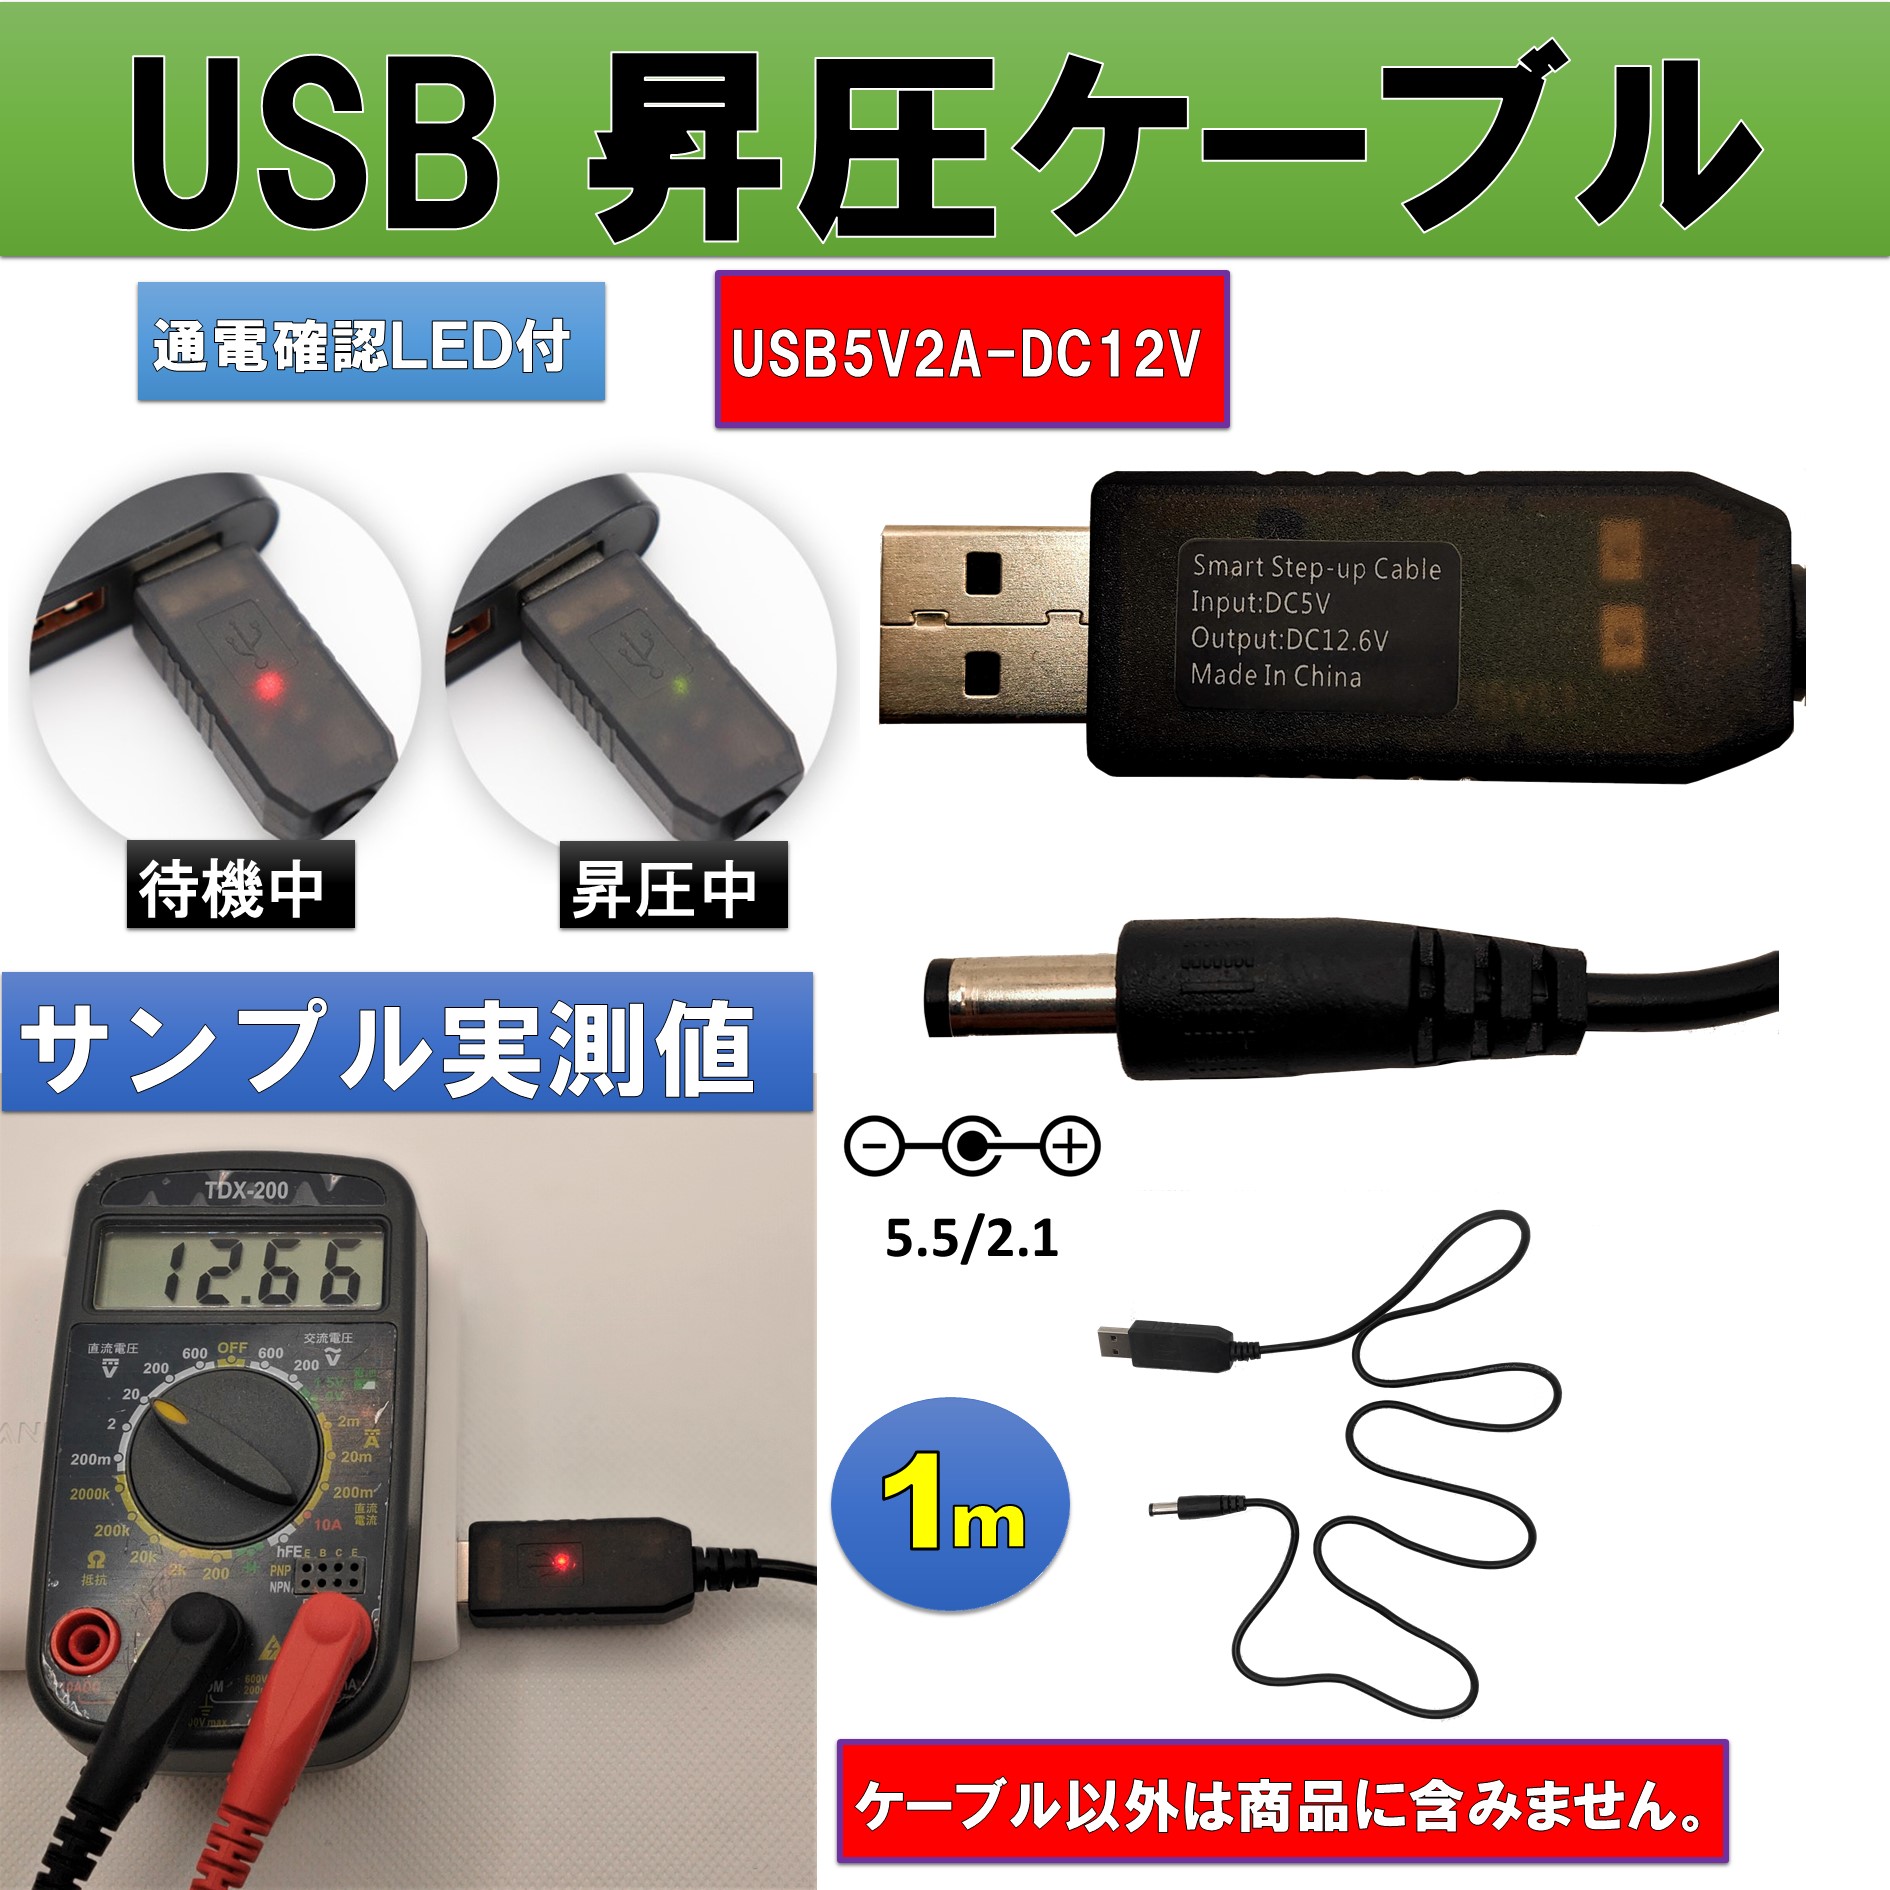 USBモバイルバッテリーから9V 12V スピーカー ライト 扇風機等が使用できます USB ケーブル 贈呈 5-9V 電圧変換 電源昇圧 予約販売品 5V-12V 1m ポイント消化